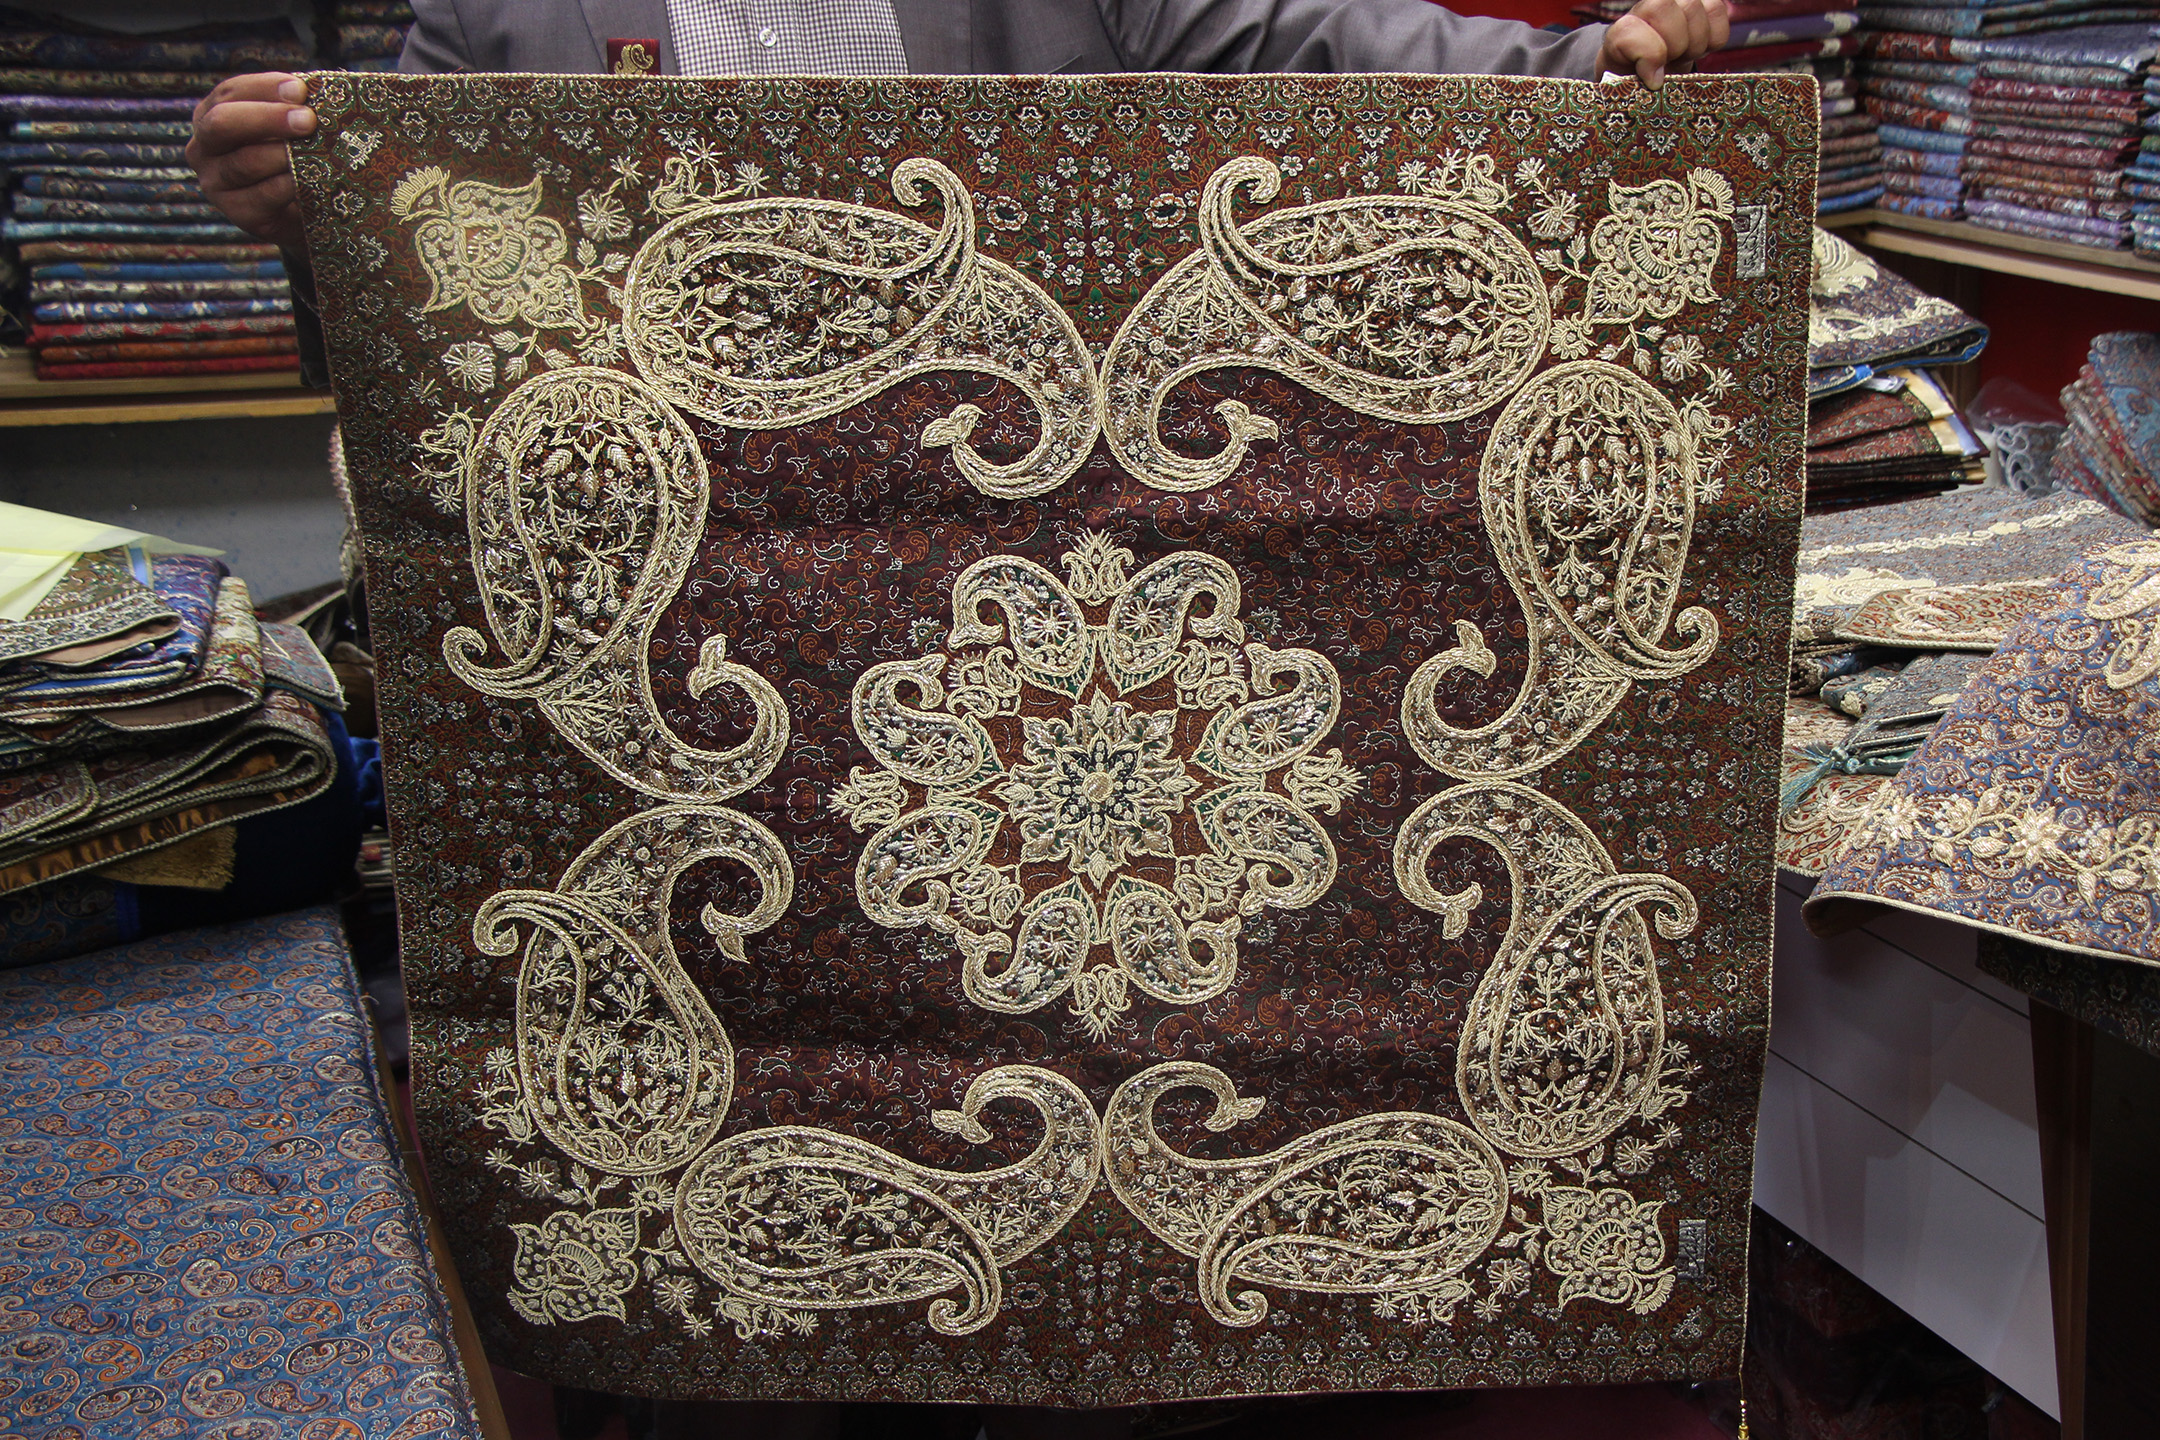 Sermeh Doozi, Luxury Ancient Iranian Embroidery - Tourism news - Tasnim  News Agency